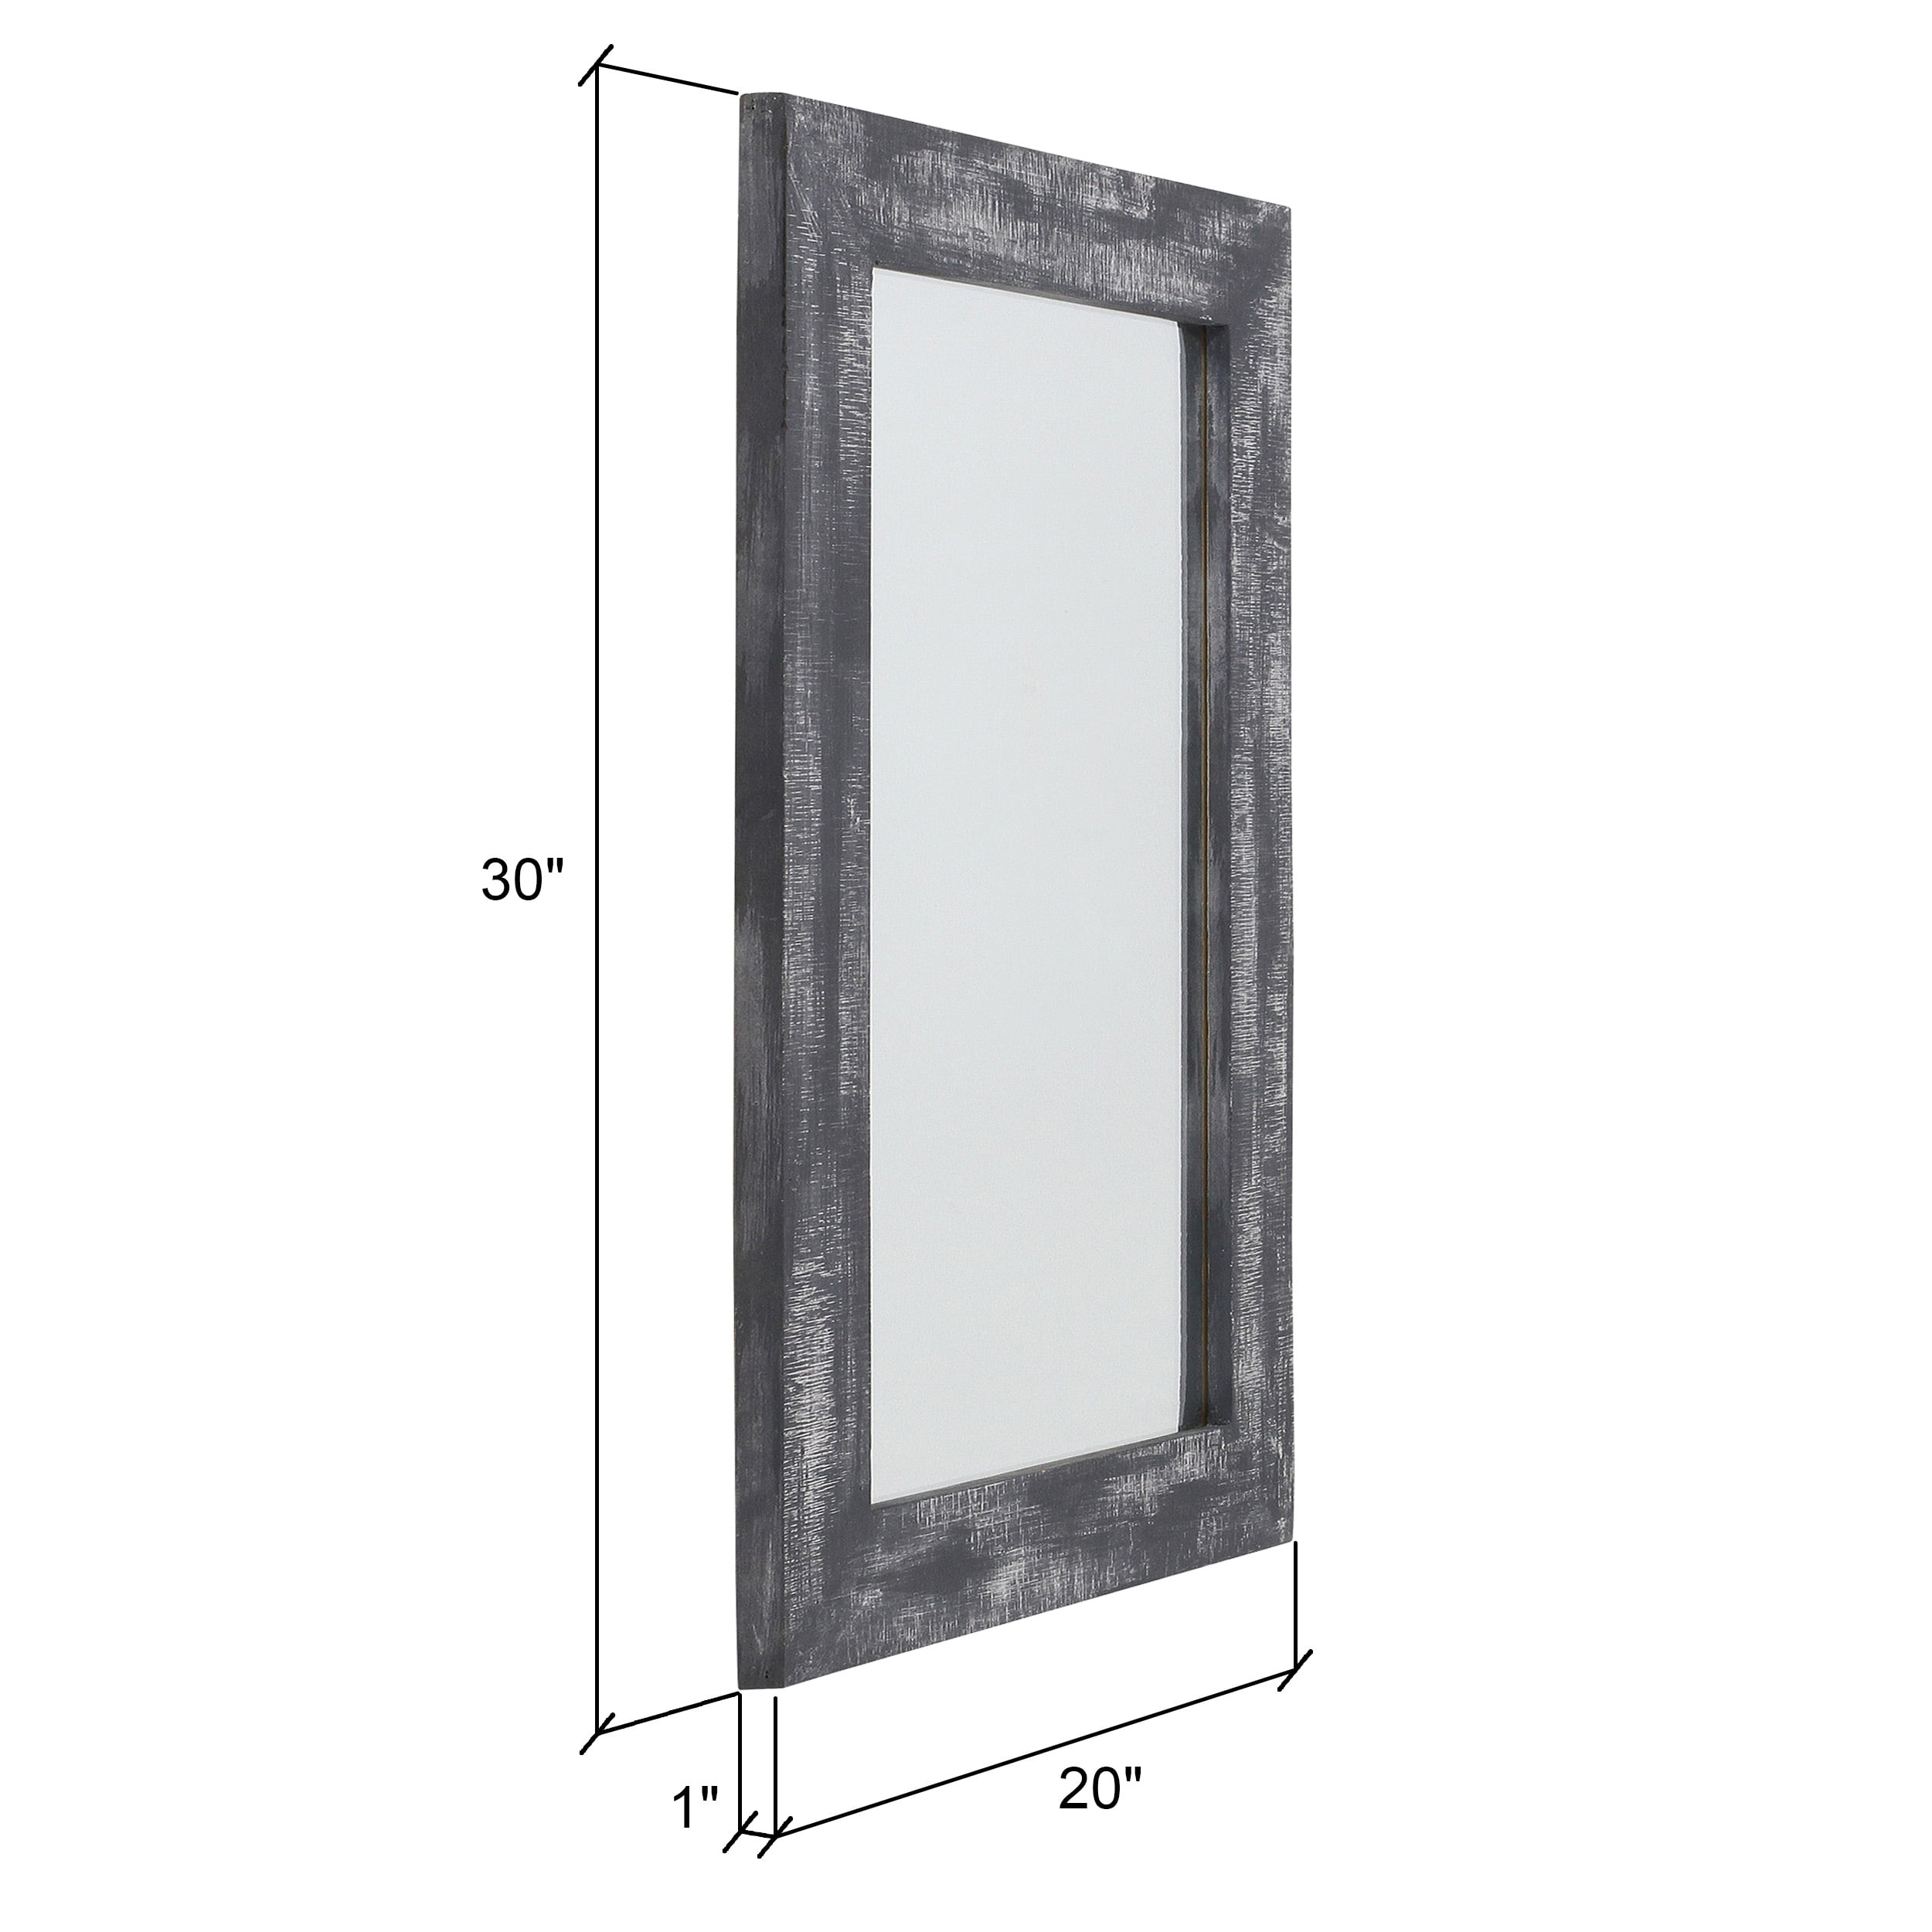 Morris Rustic Wood Wall Mirror - Gray 30 x 20 by Aspire 